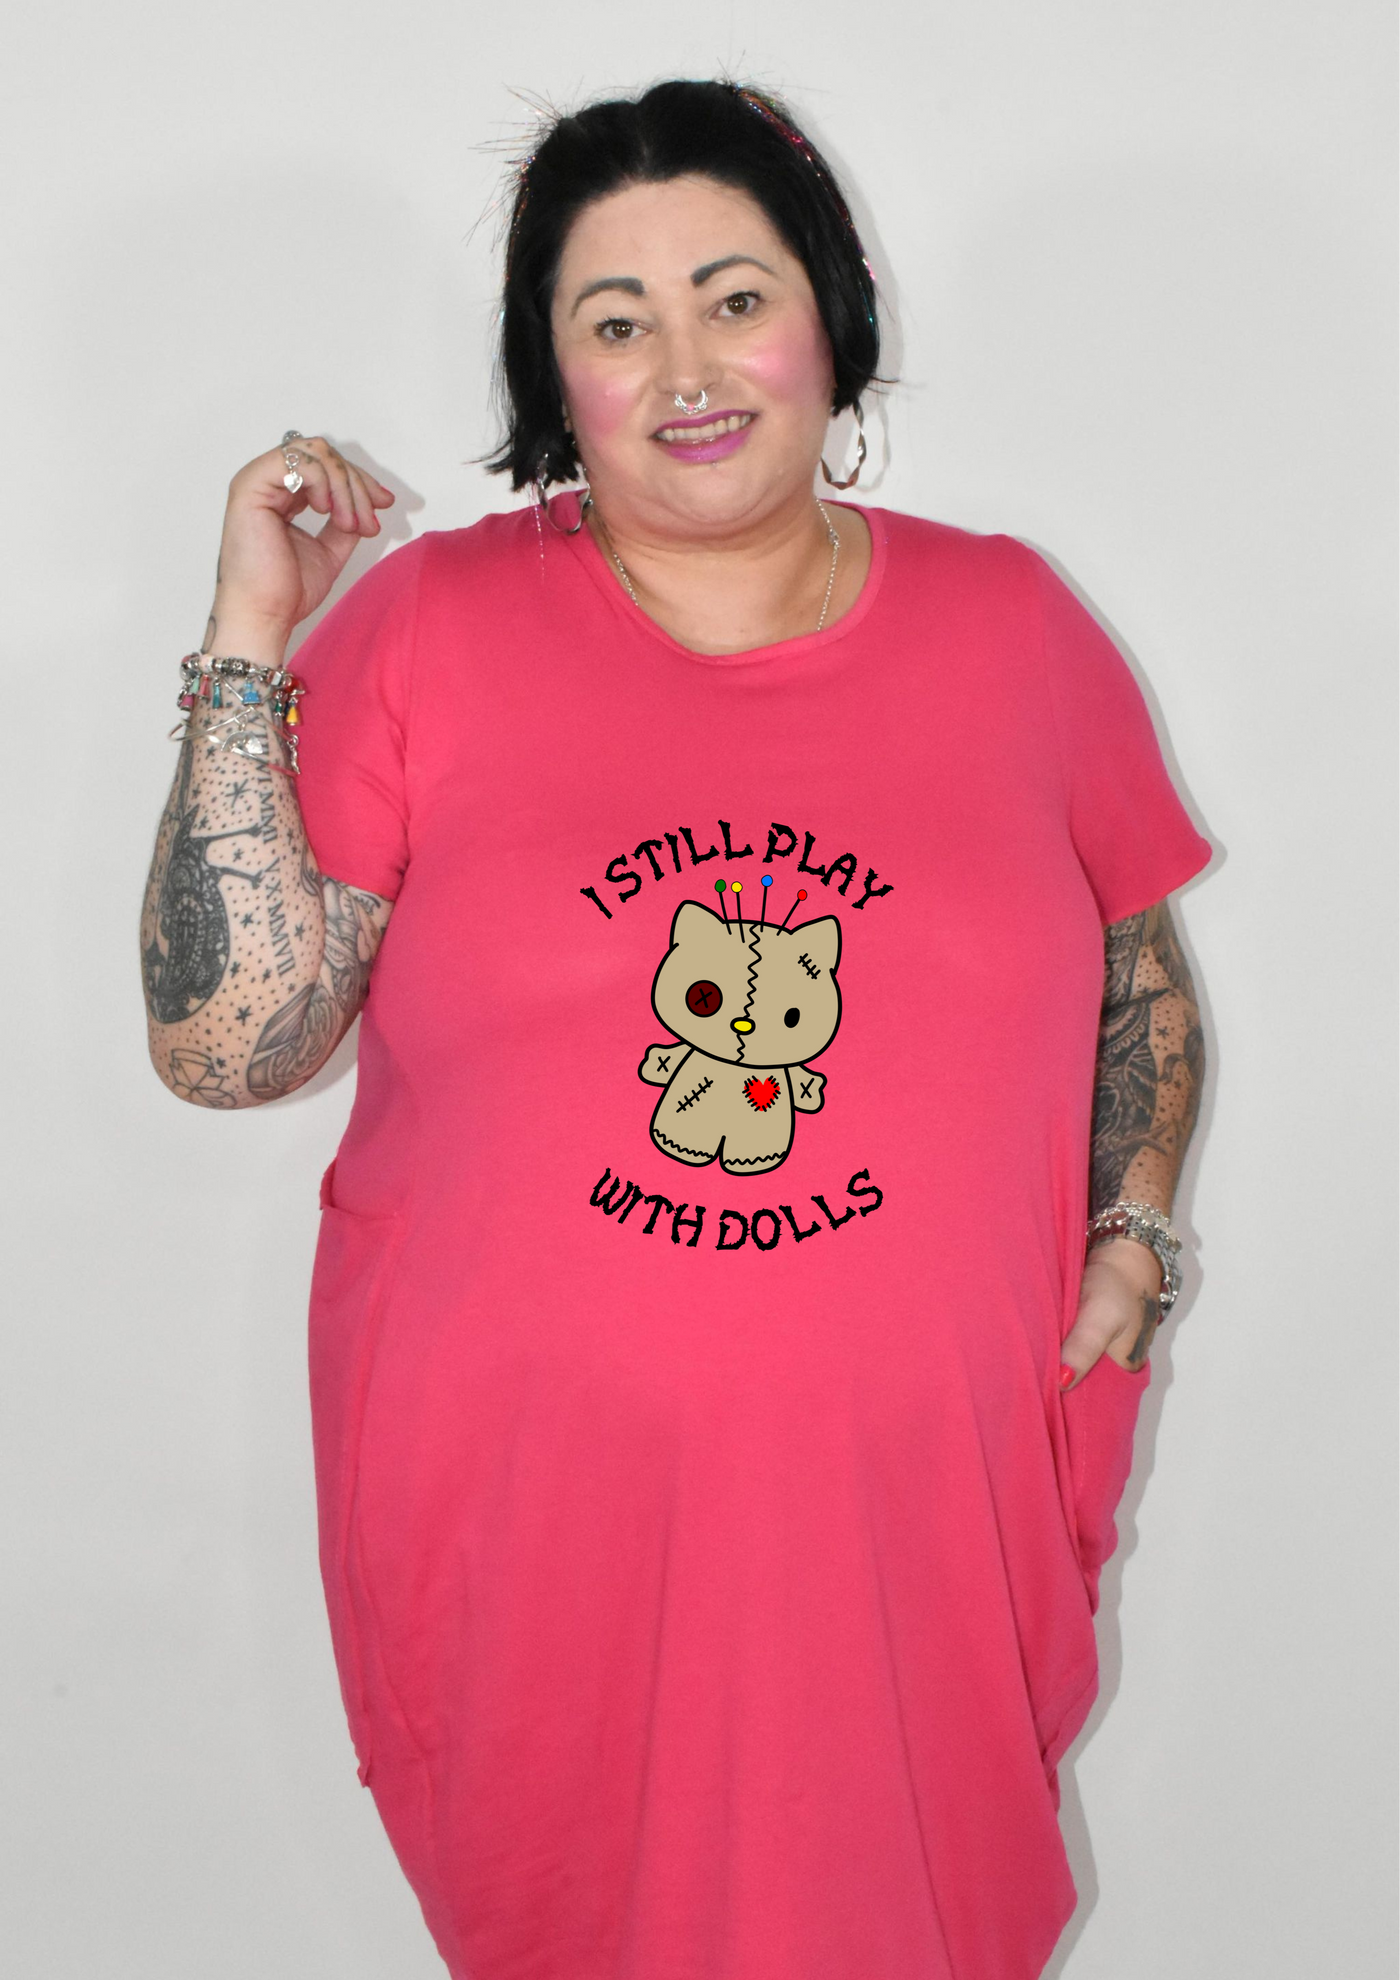 Hot Pink “I Still Play With Dolls” Kitty T-shirt Dress